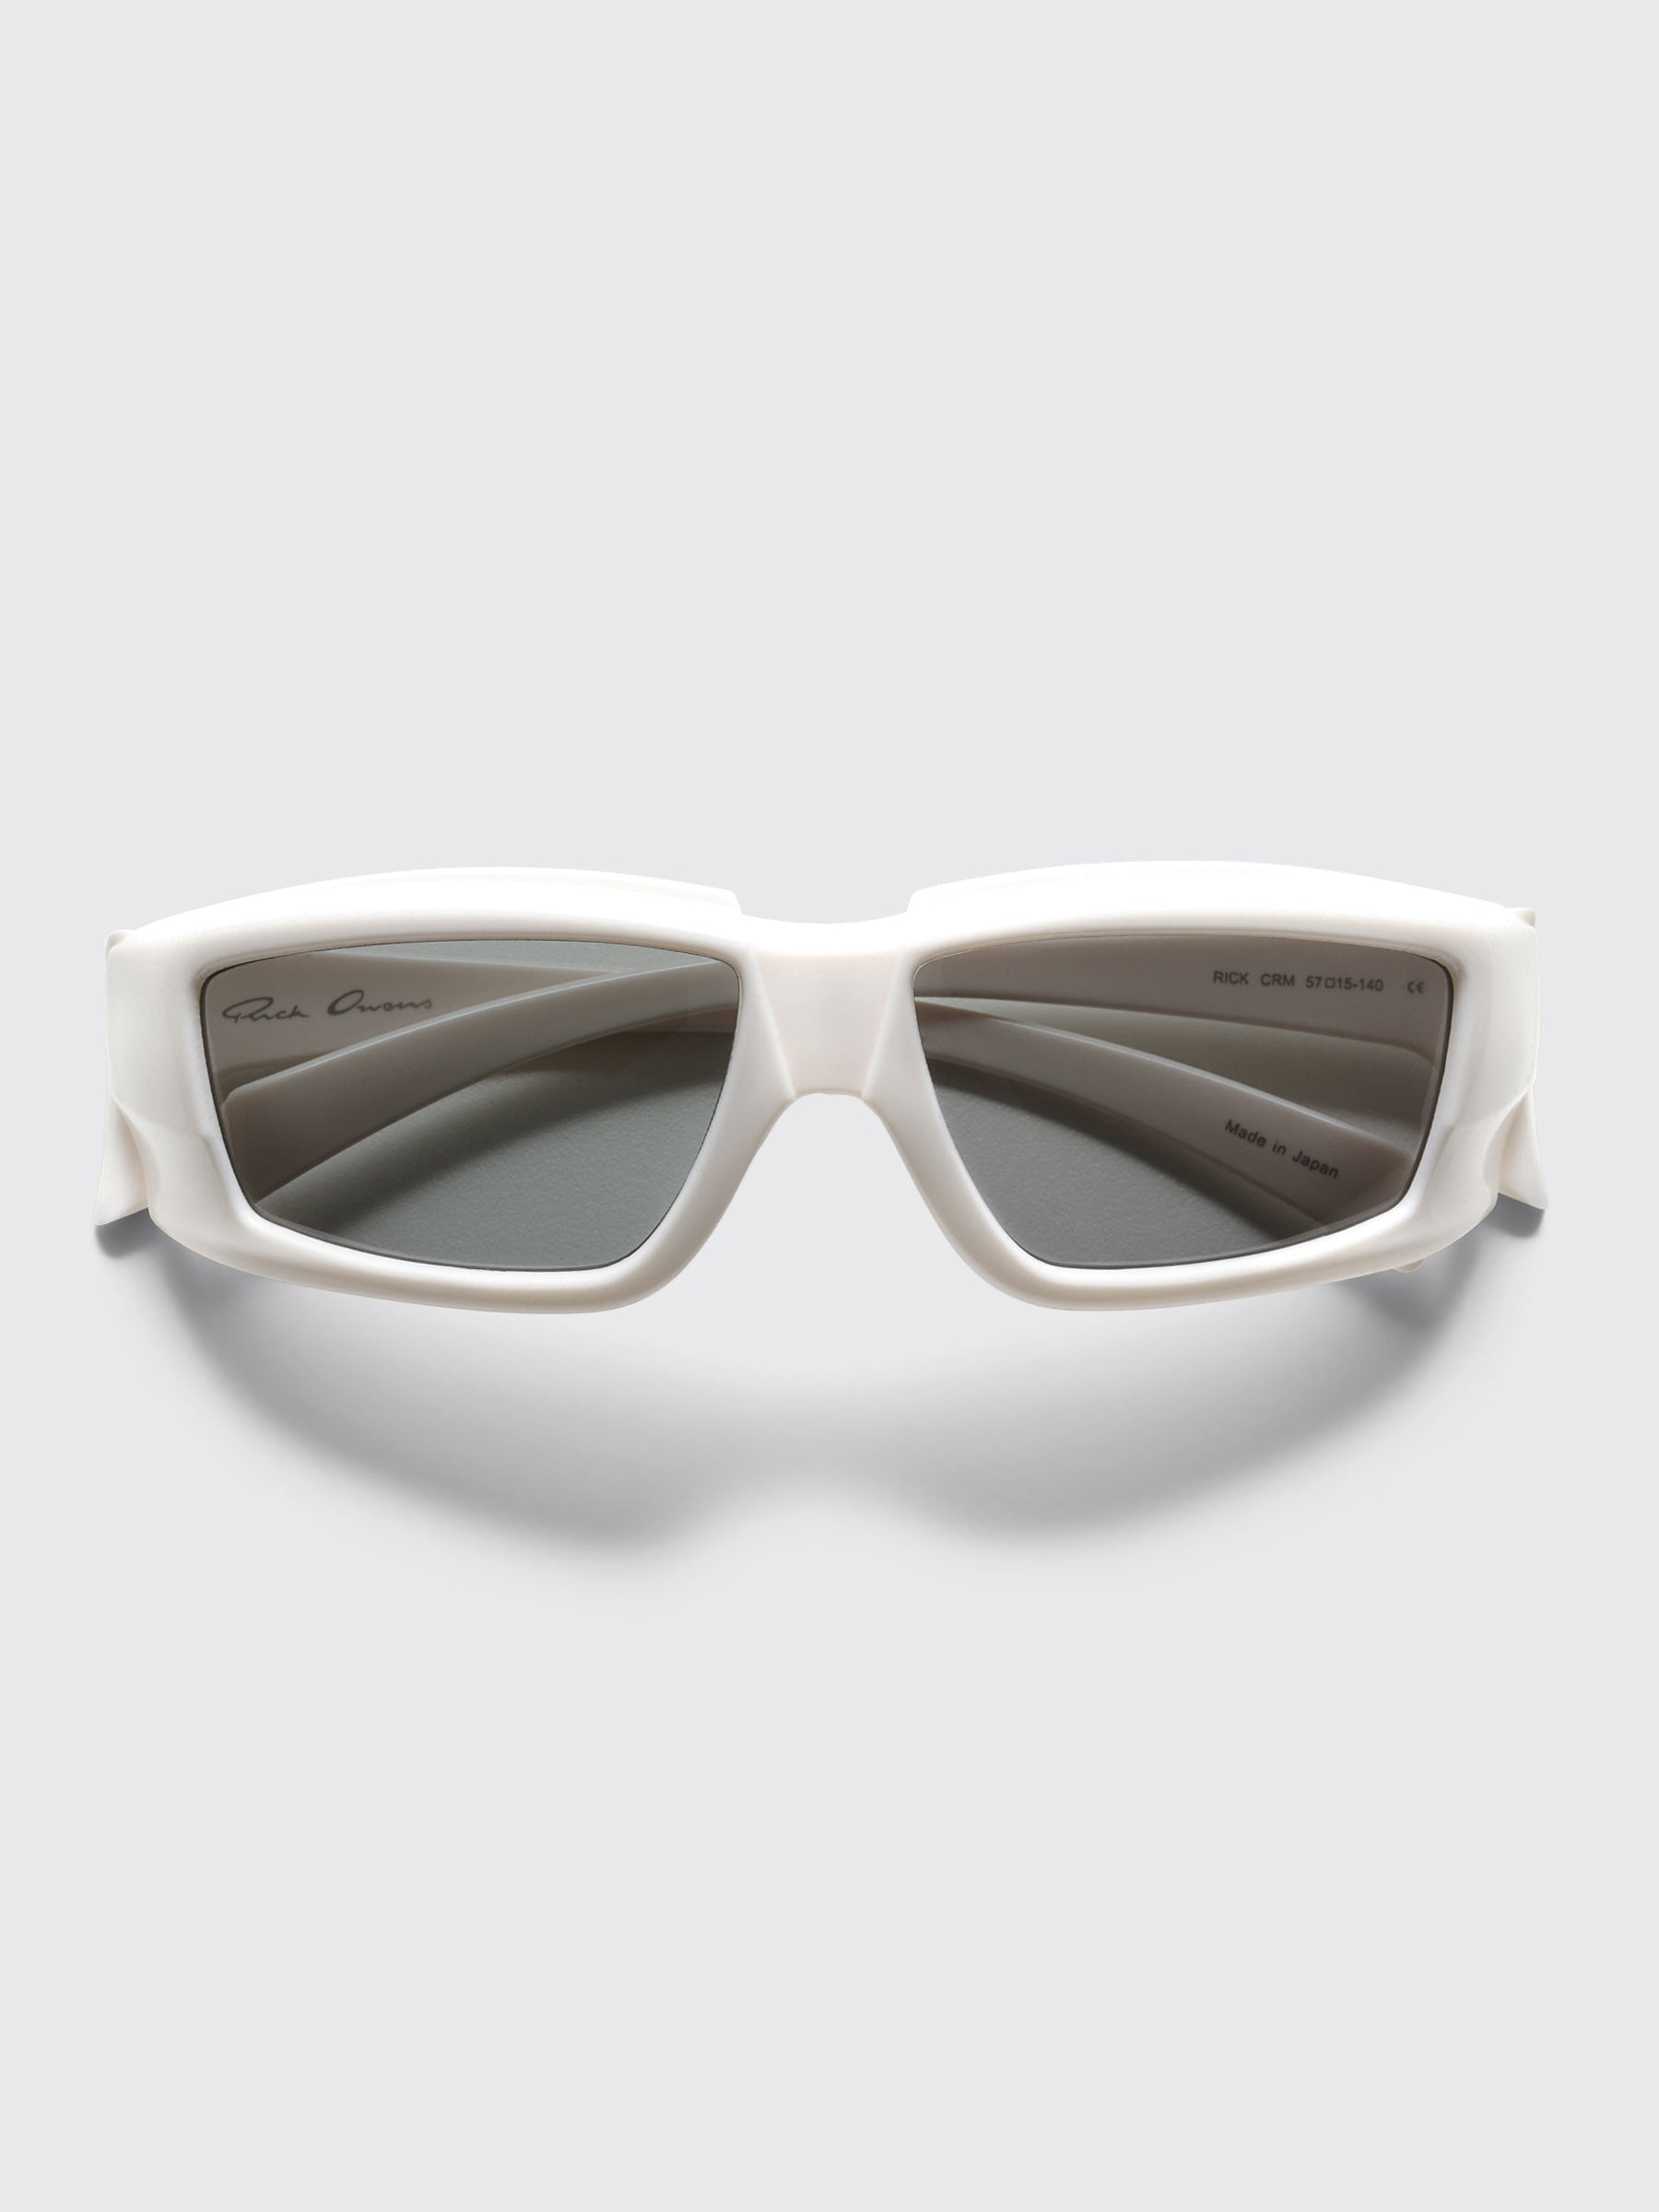 Rick Owens Sunglasses Cream / Black